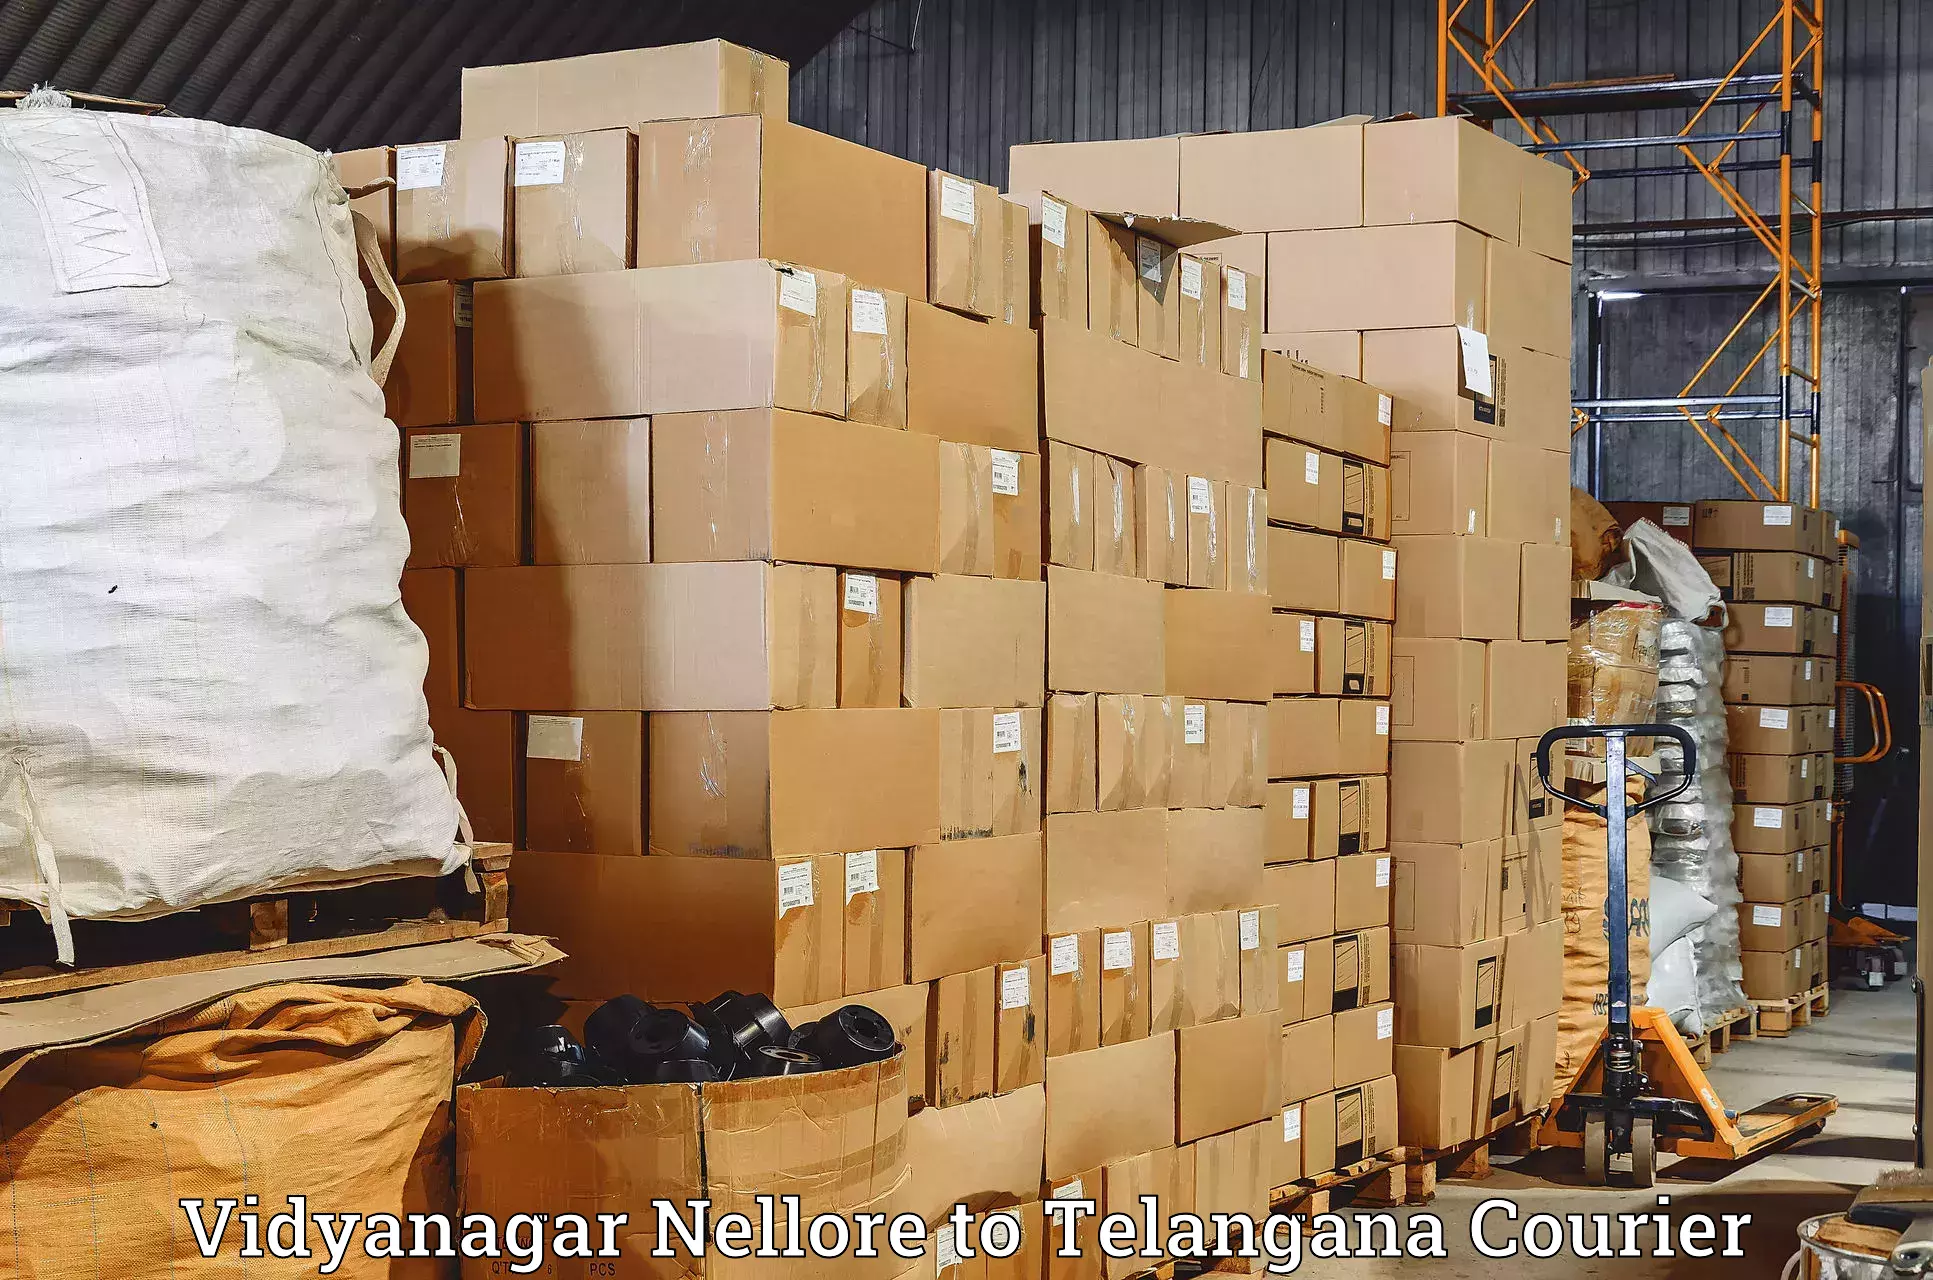 Courier service booking Vidyanagar Nellore to Nizamabad